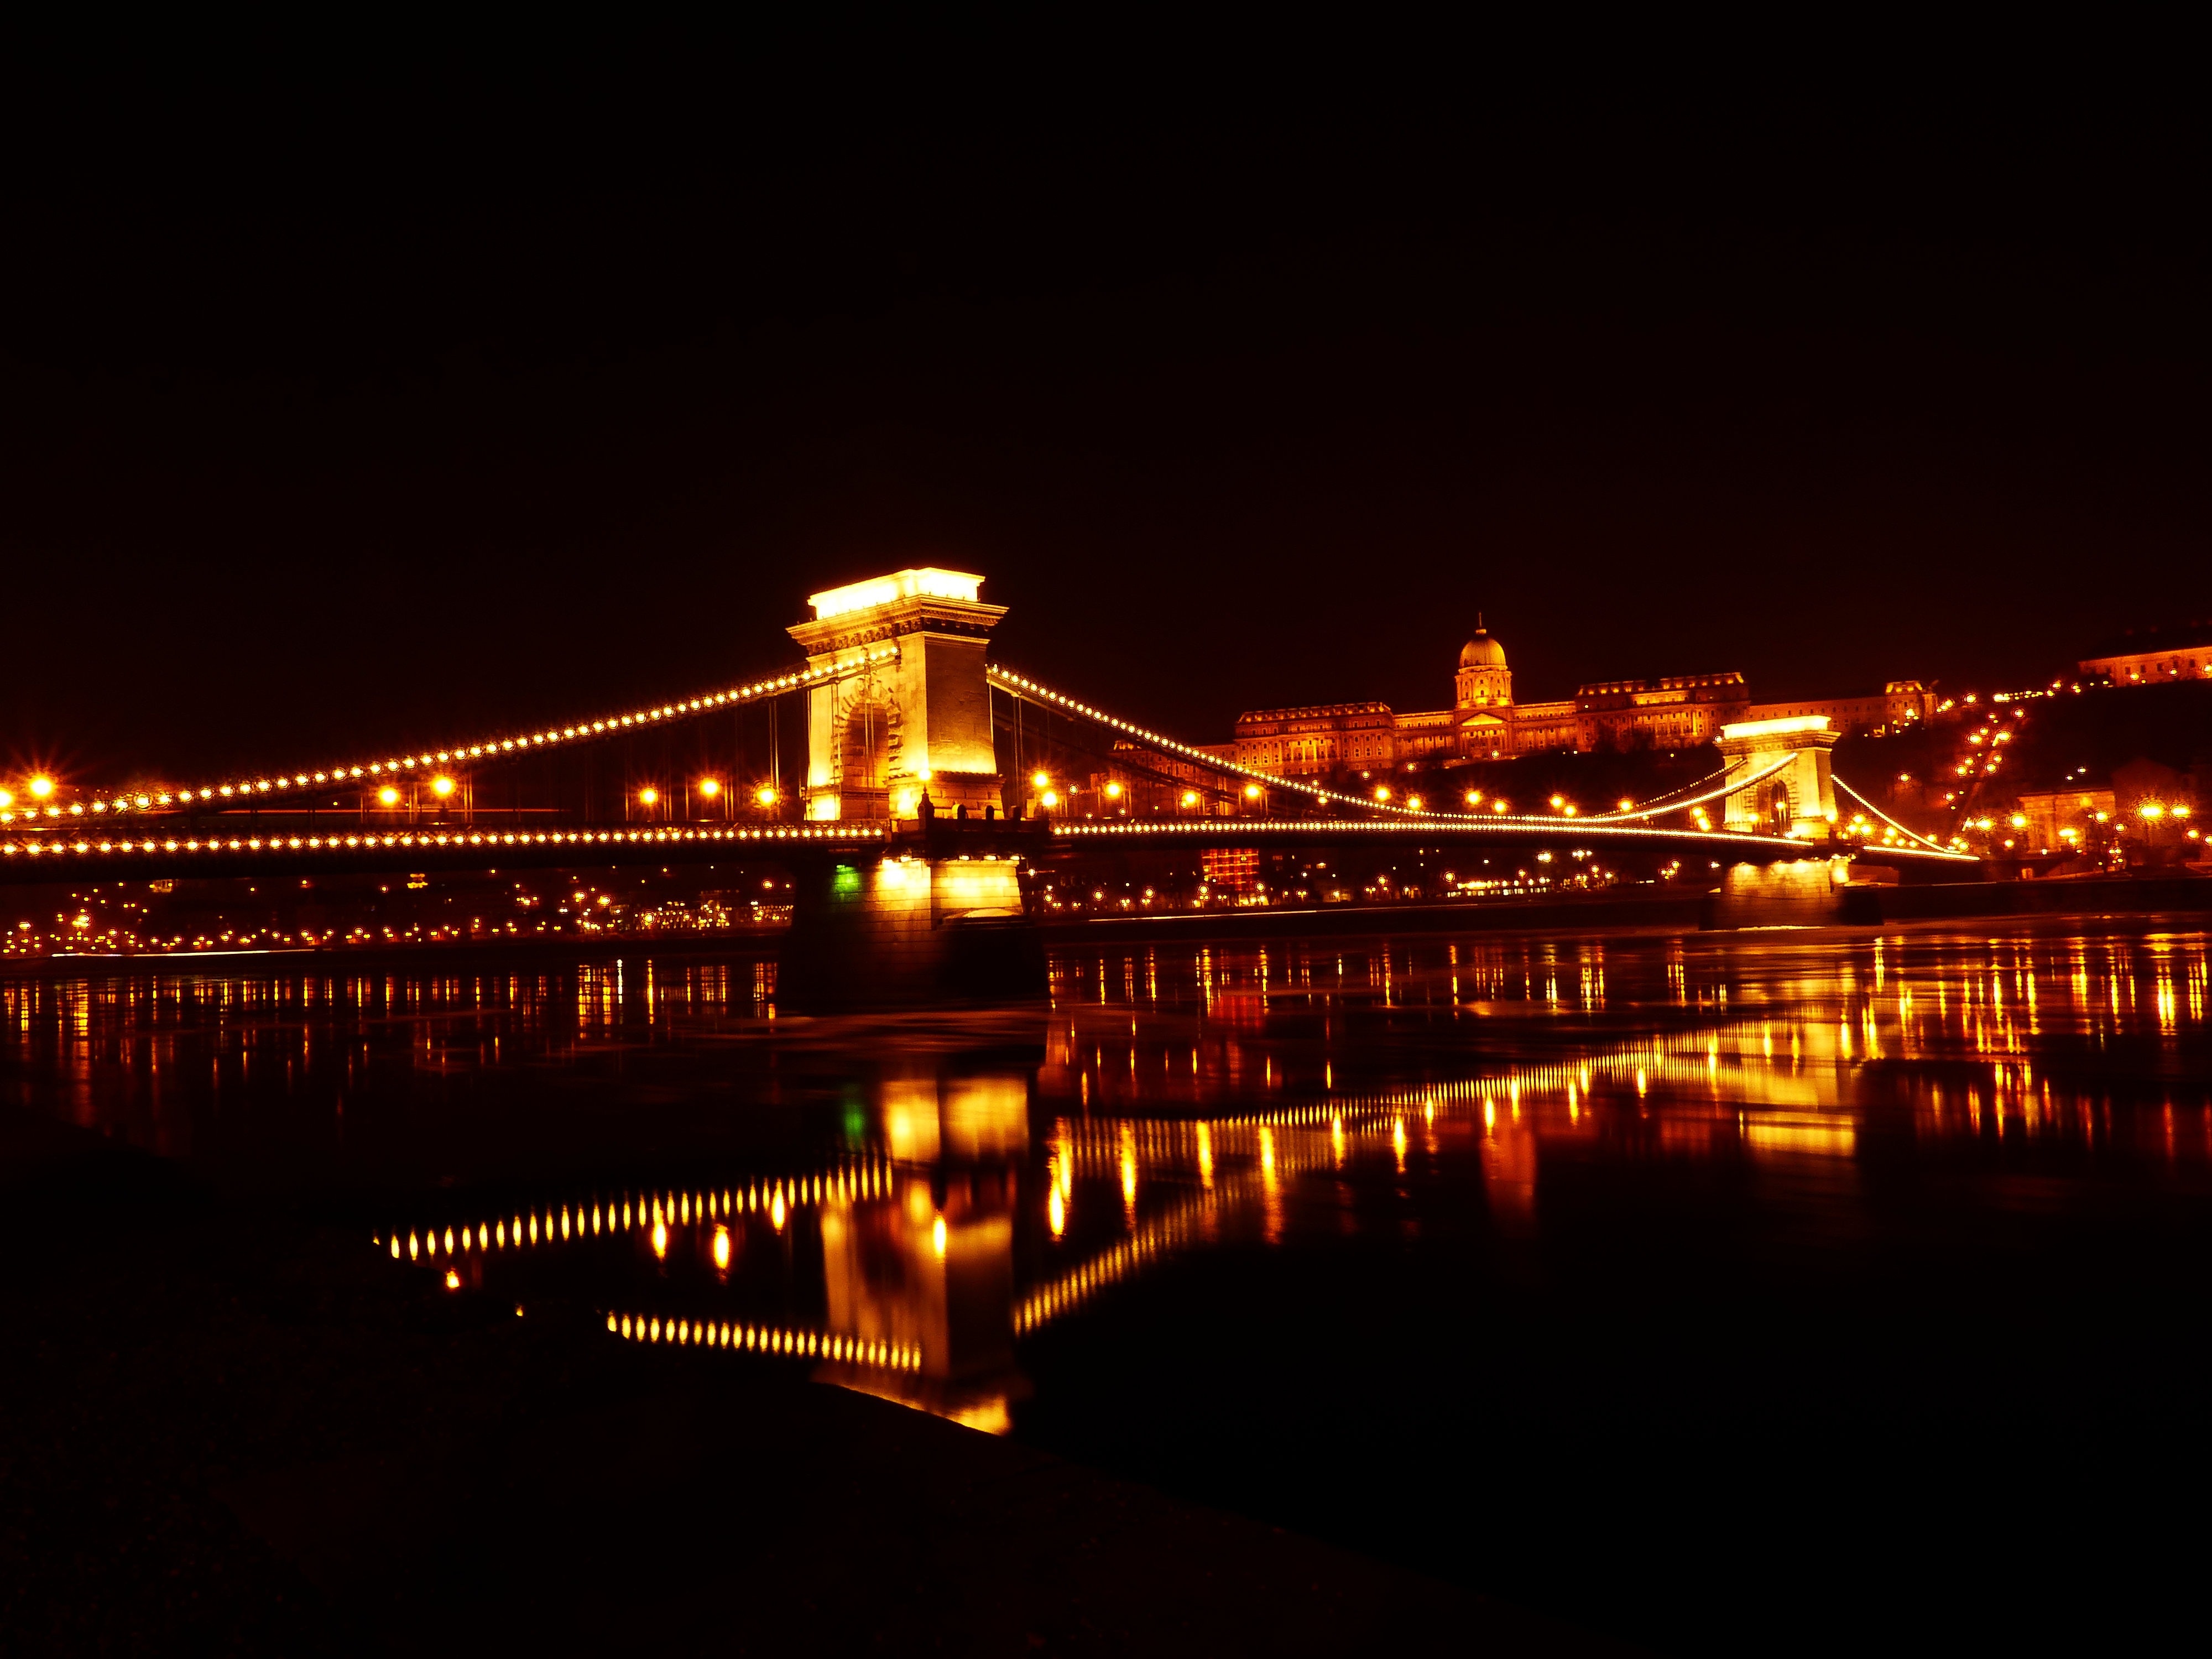 Illuminated bridge over river at night photo